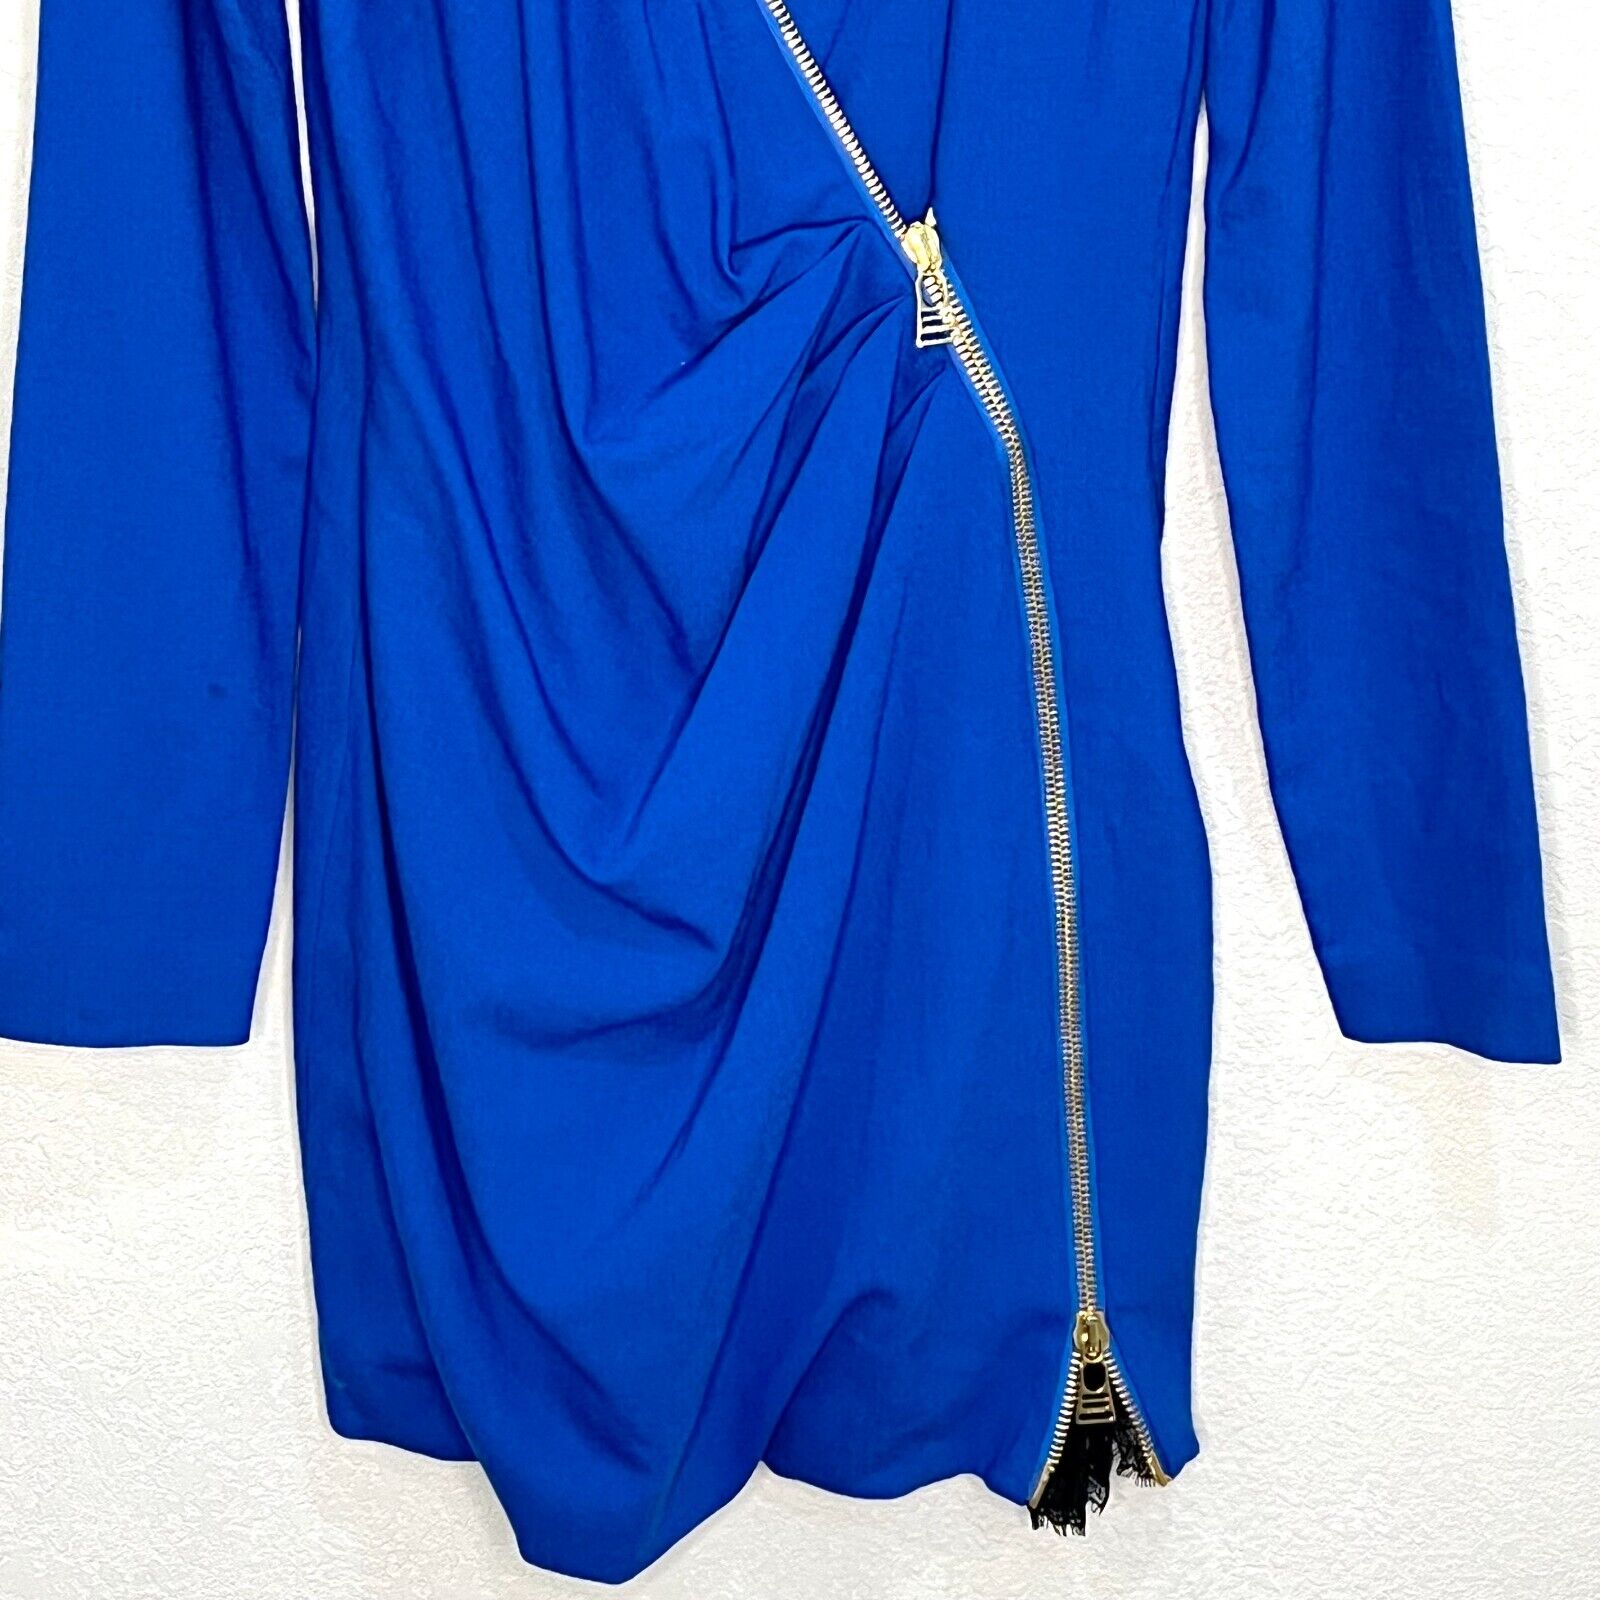 La Perla Daily Looks Hot Blue Short Cool-Wool Zipper Dress Size 10 NEW